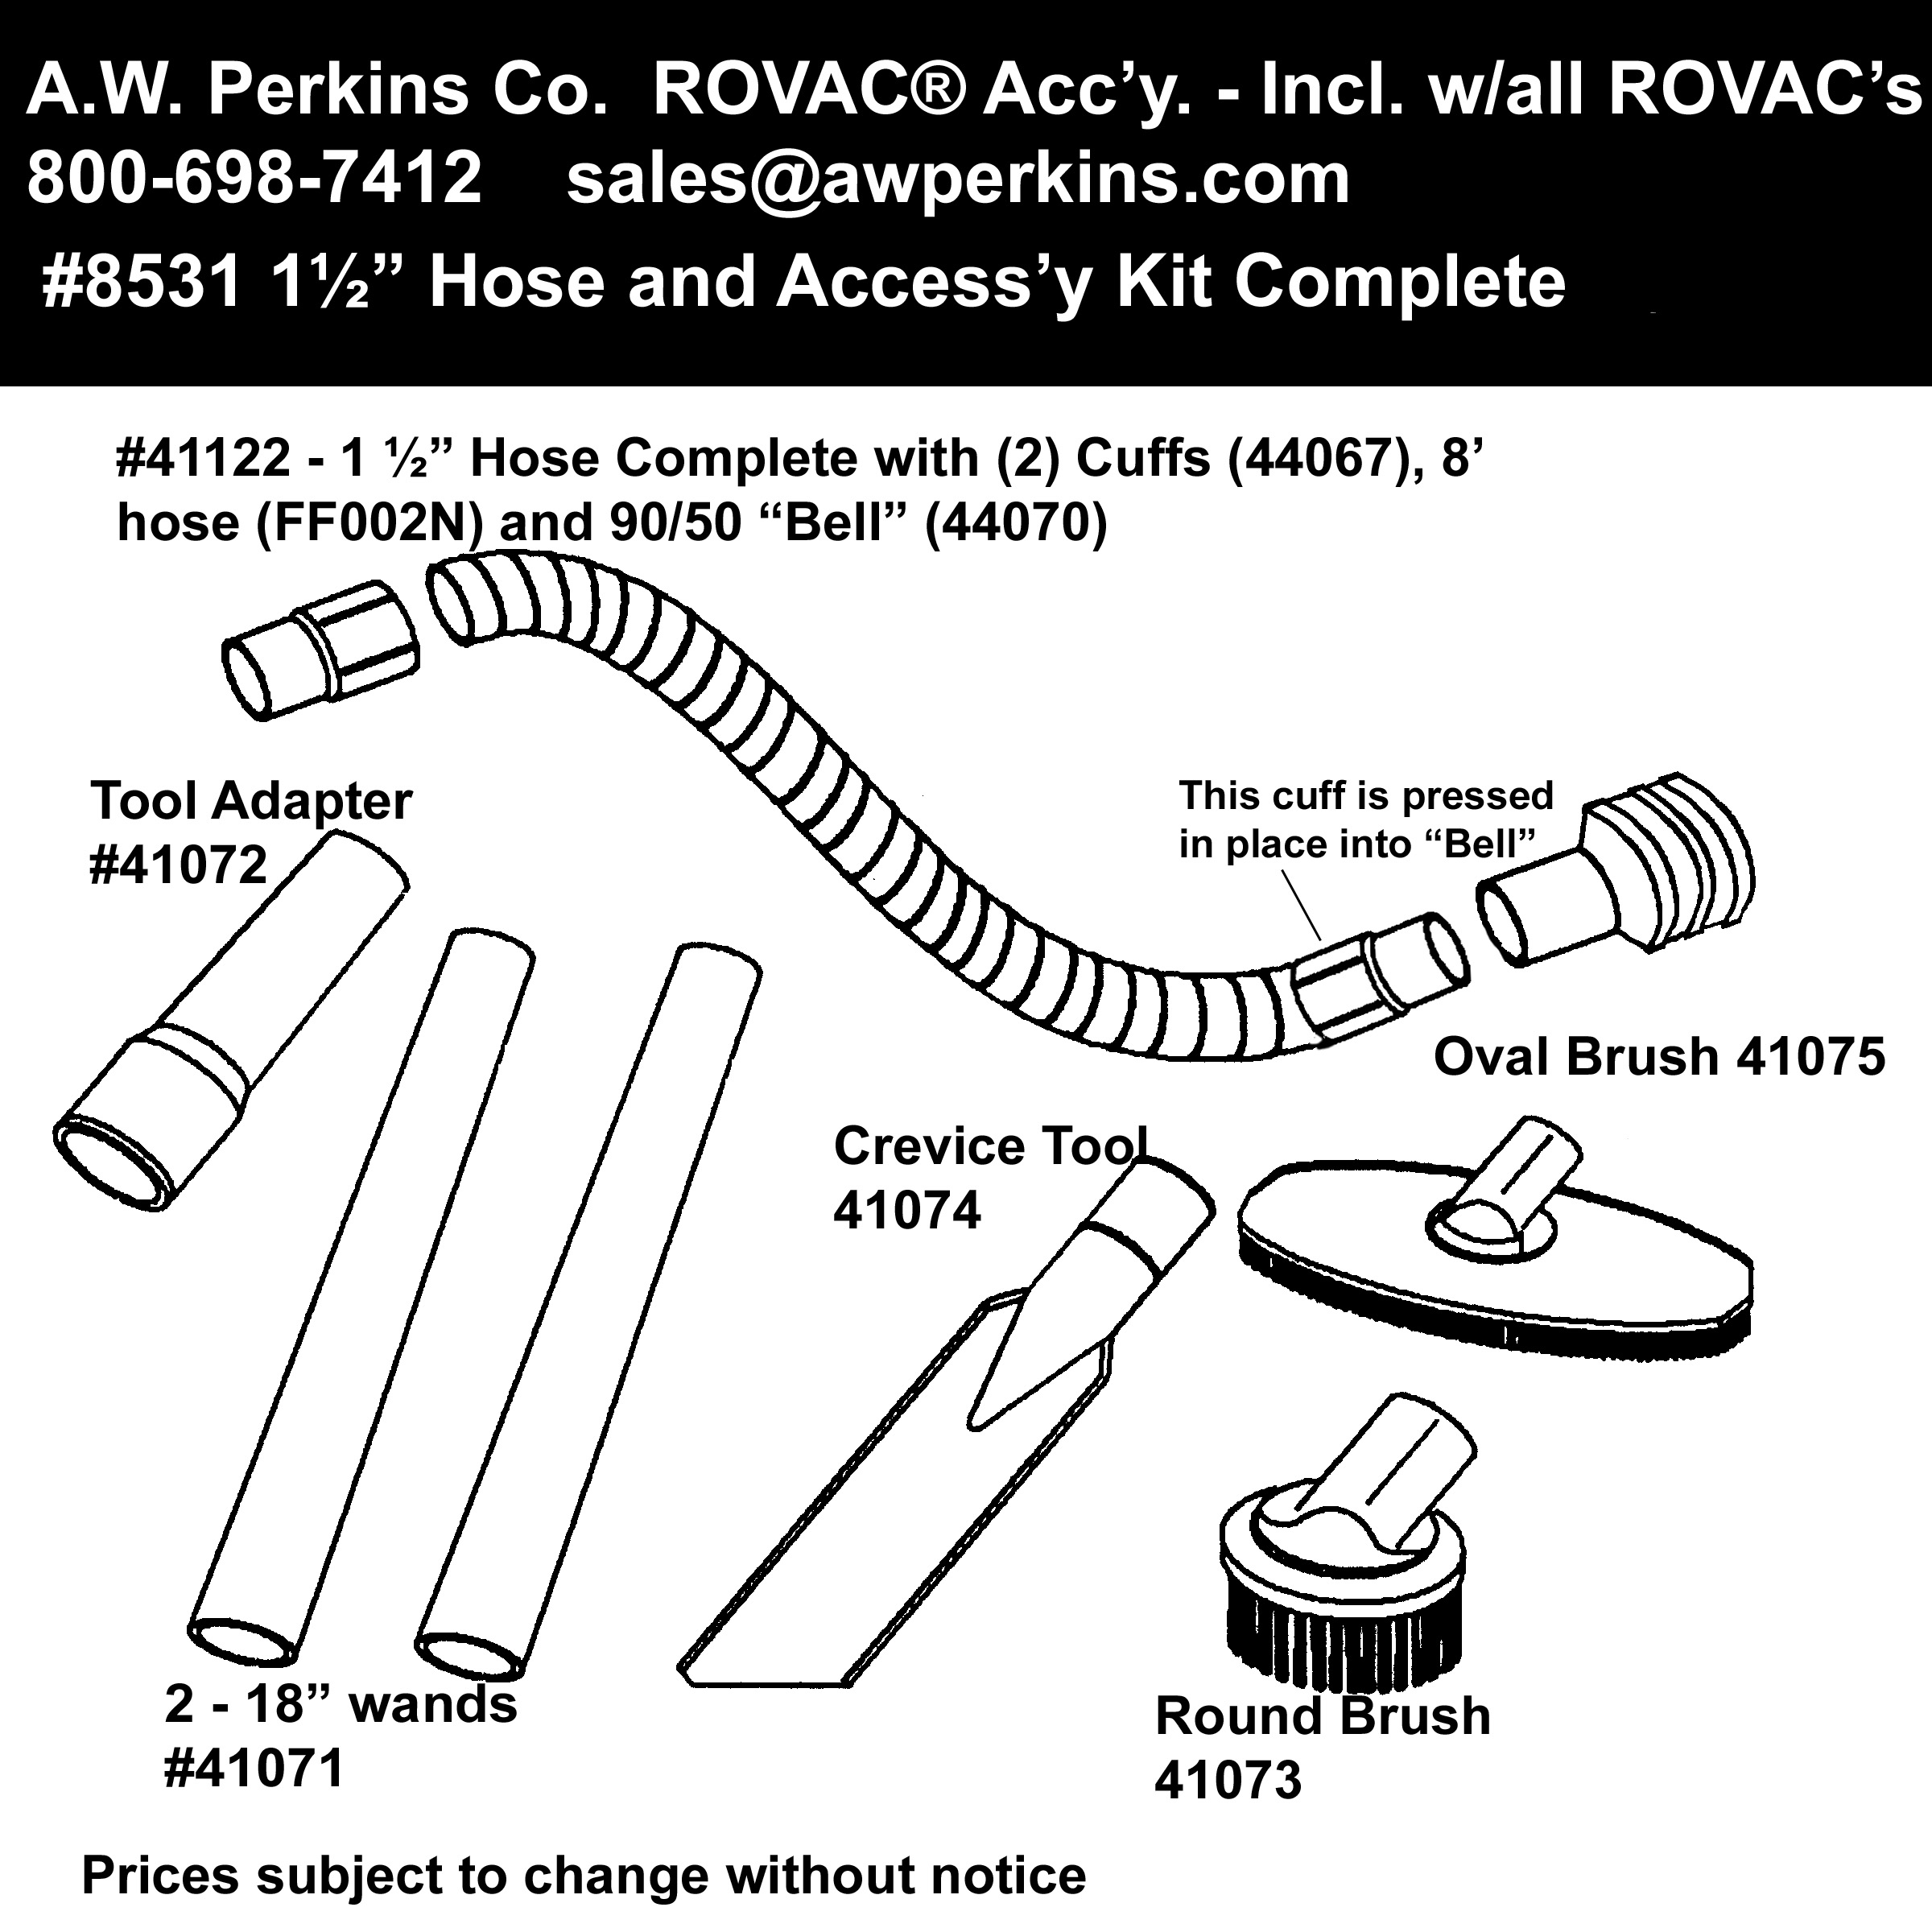 41072 Tool Adapter for 1.5" Rovac vacuum hose